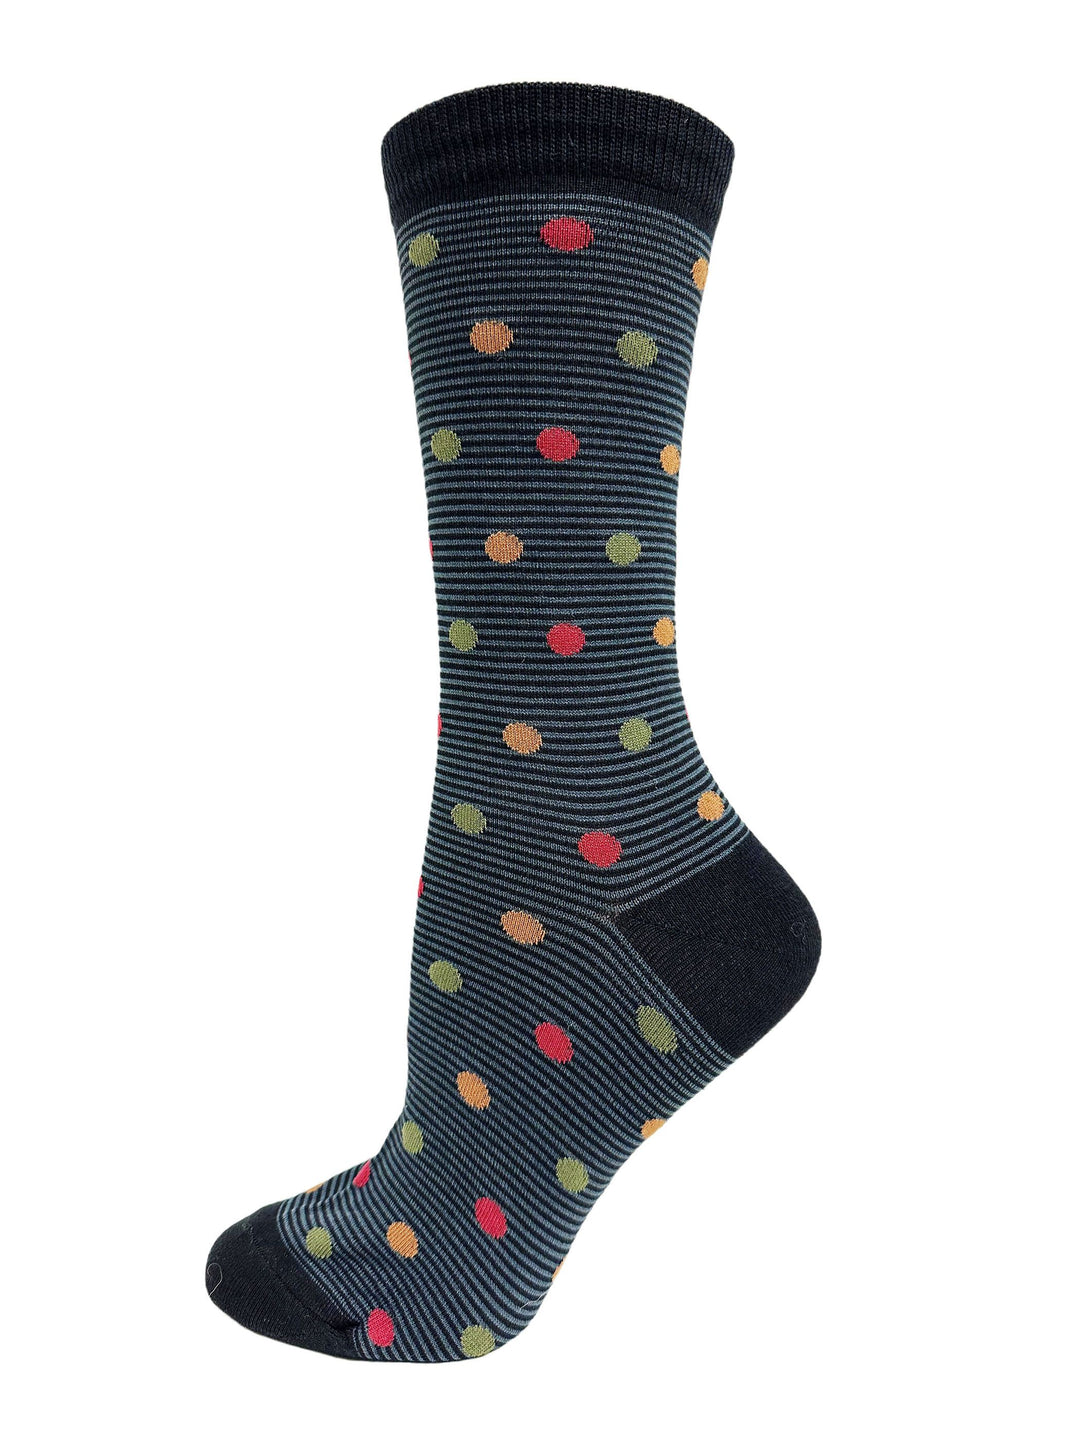 "Dots on Line" Cotton Dress Socks by Point Zero - Medium